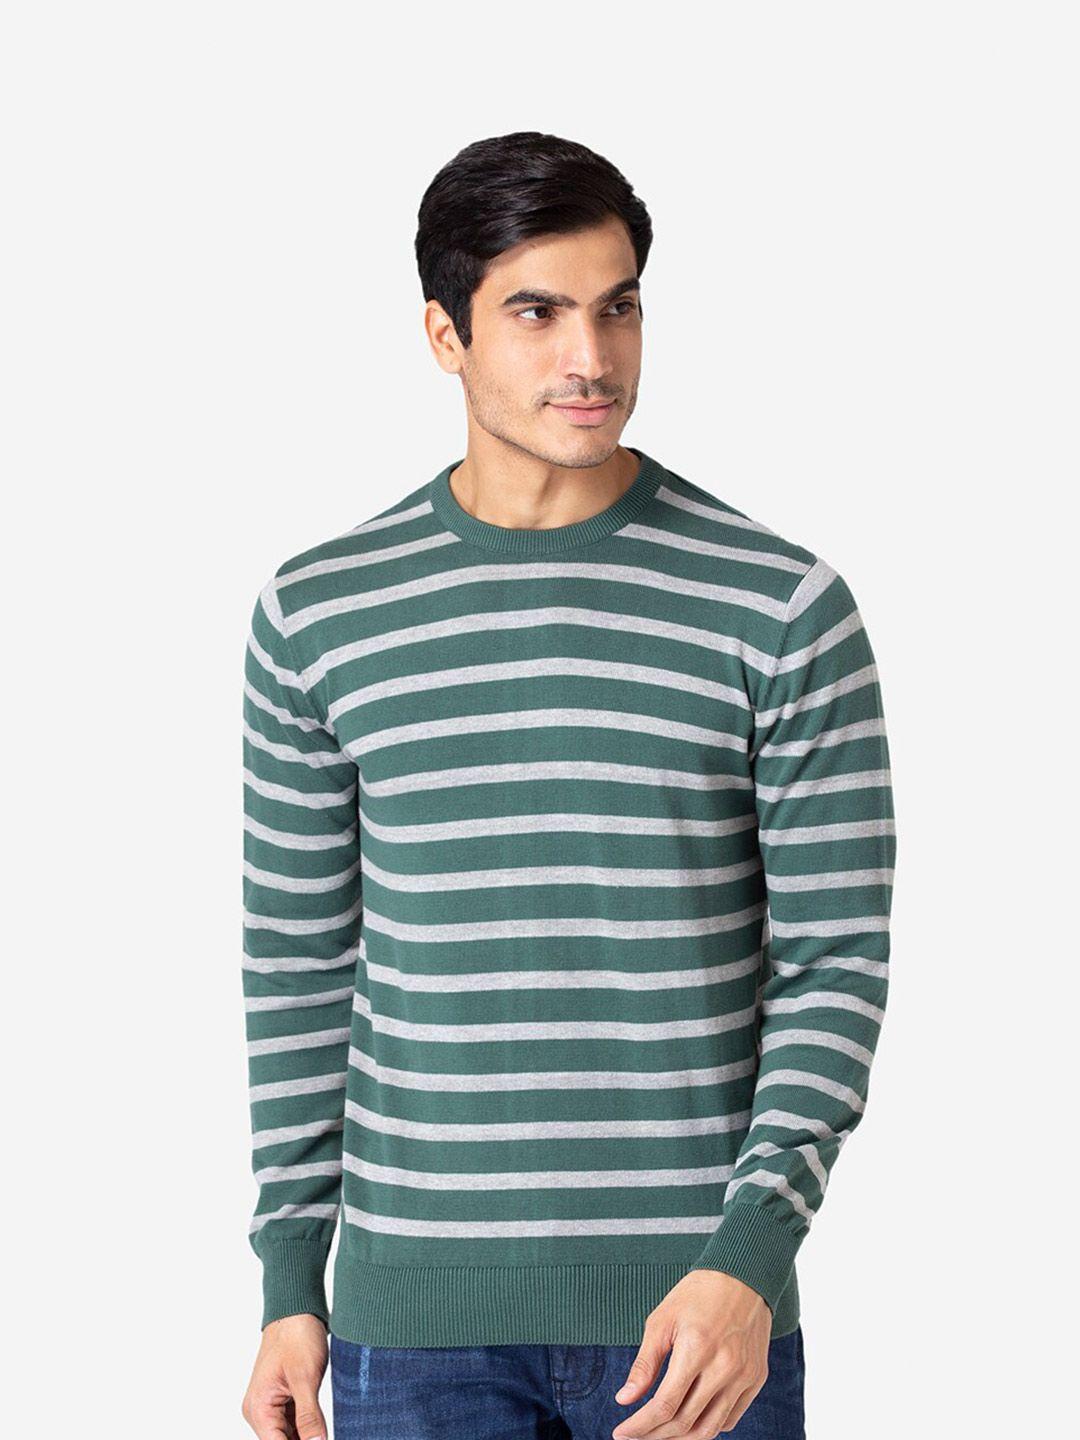 allen-cooper-men-striped-pullover-cotton-sweater